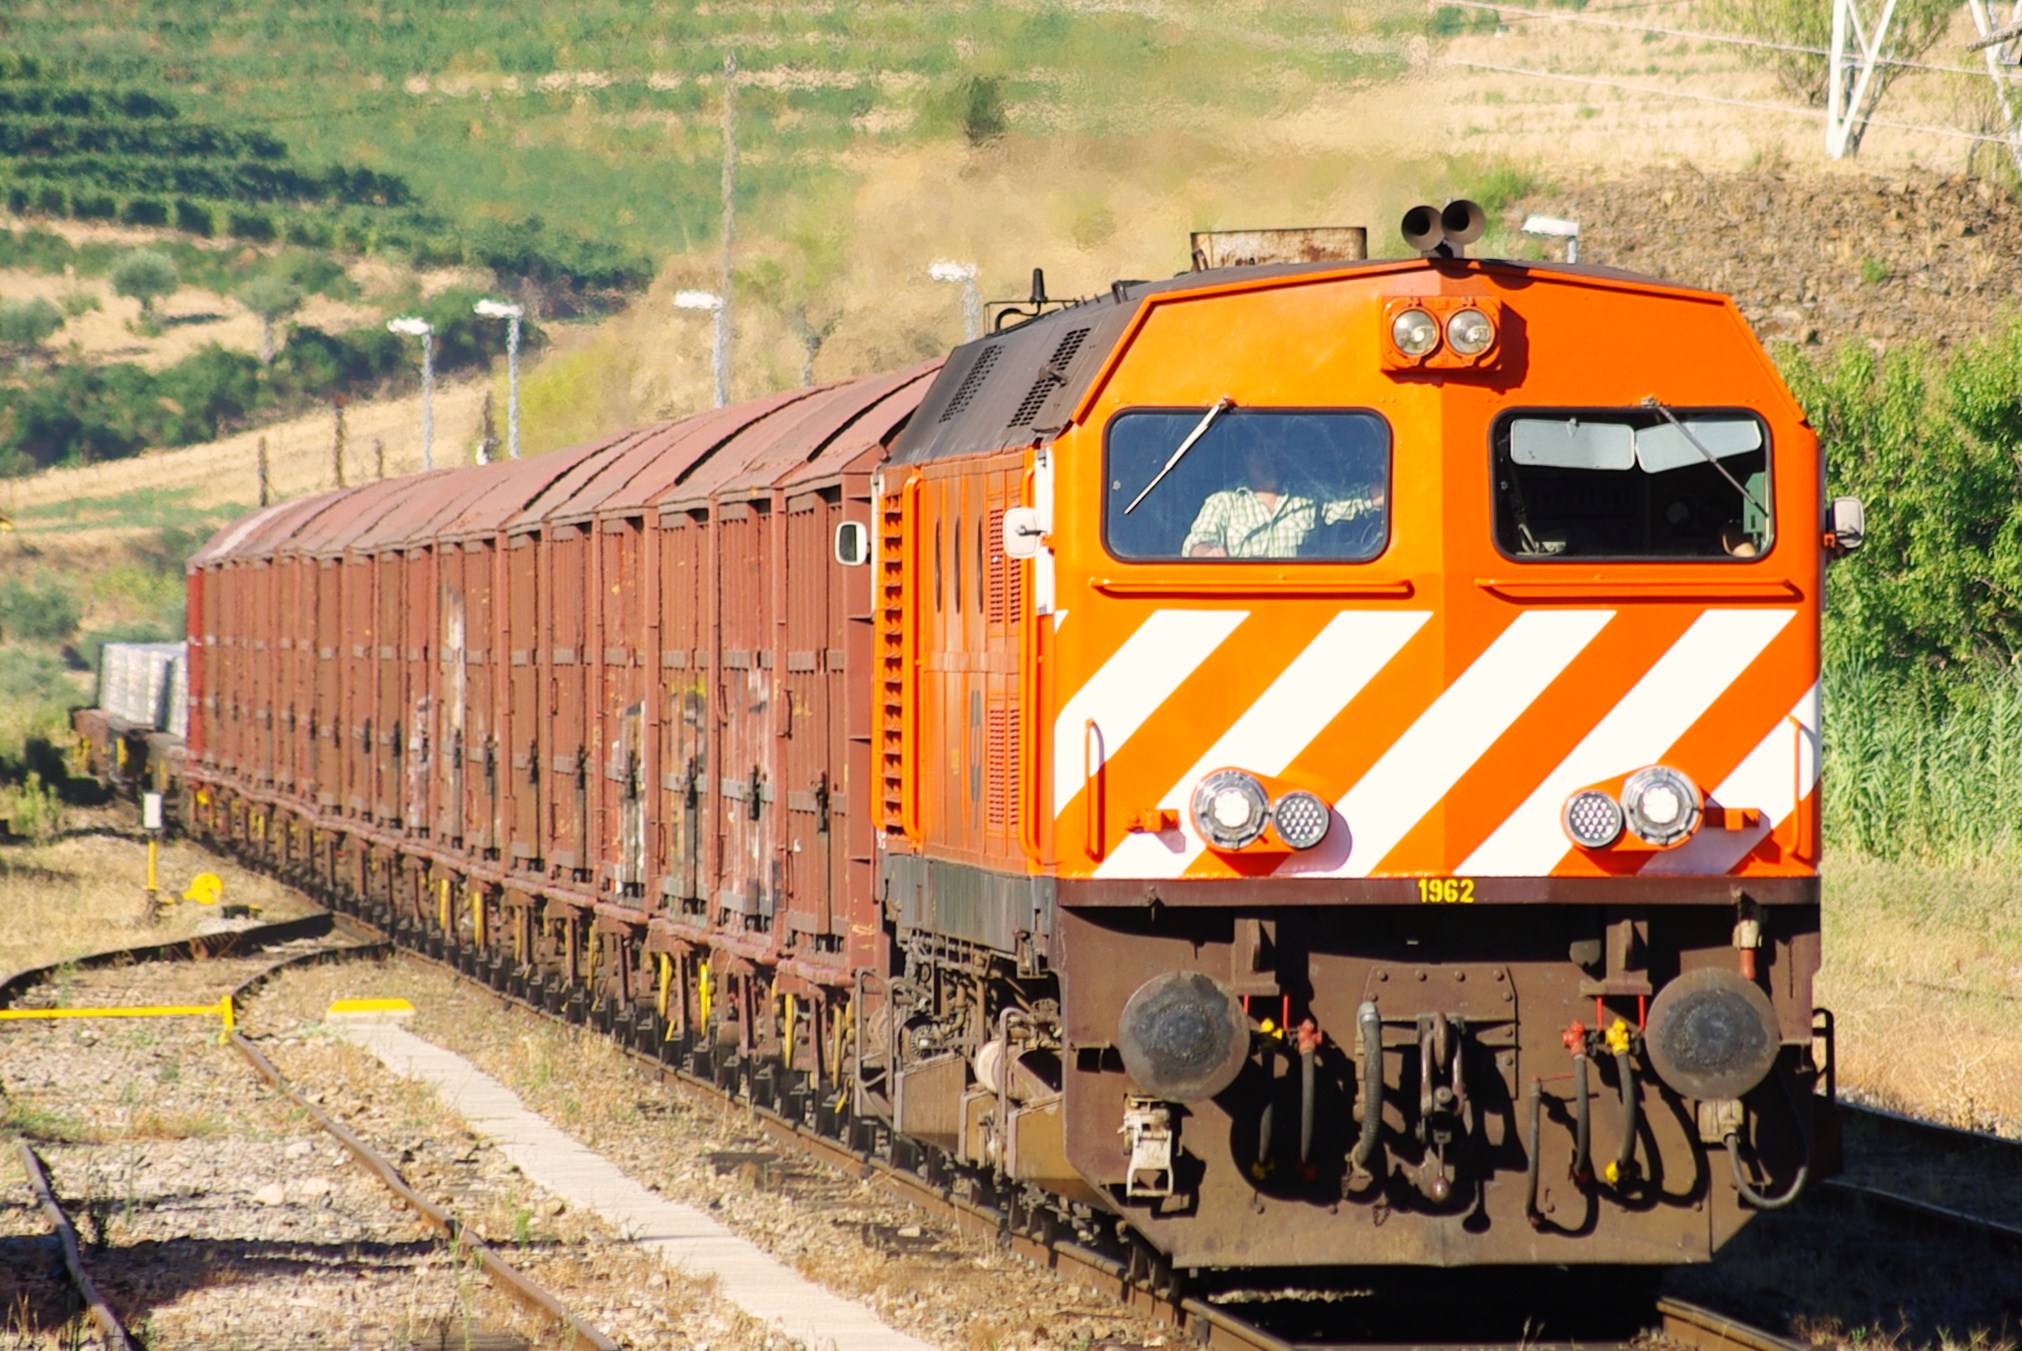 orange and white train on tracks next to grassy hill